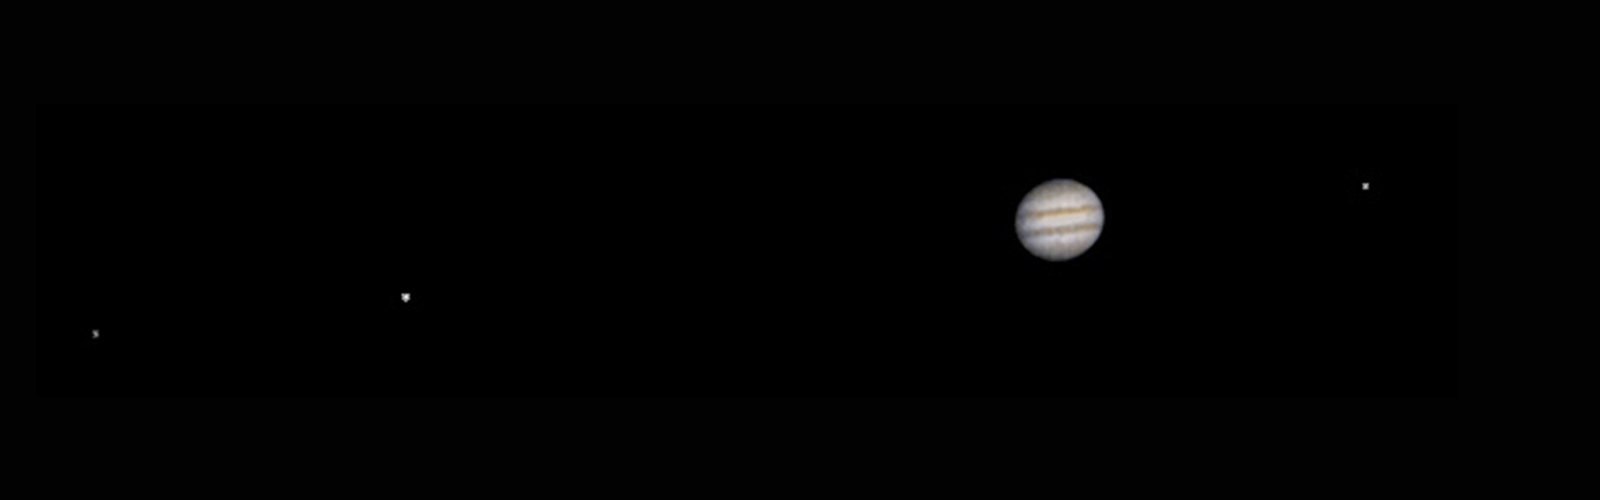 four largest moons of jupiter